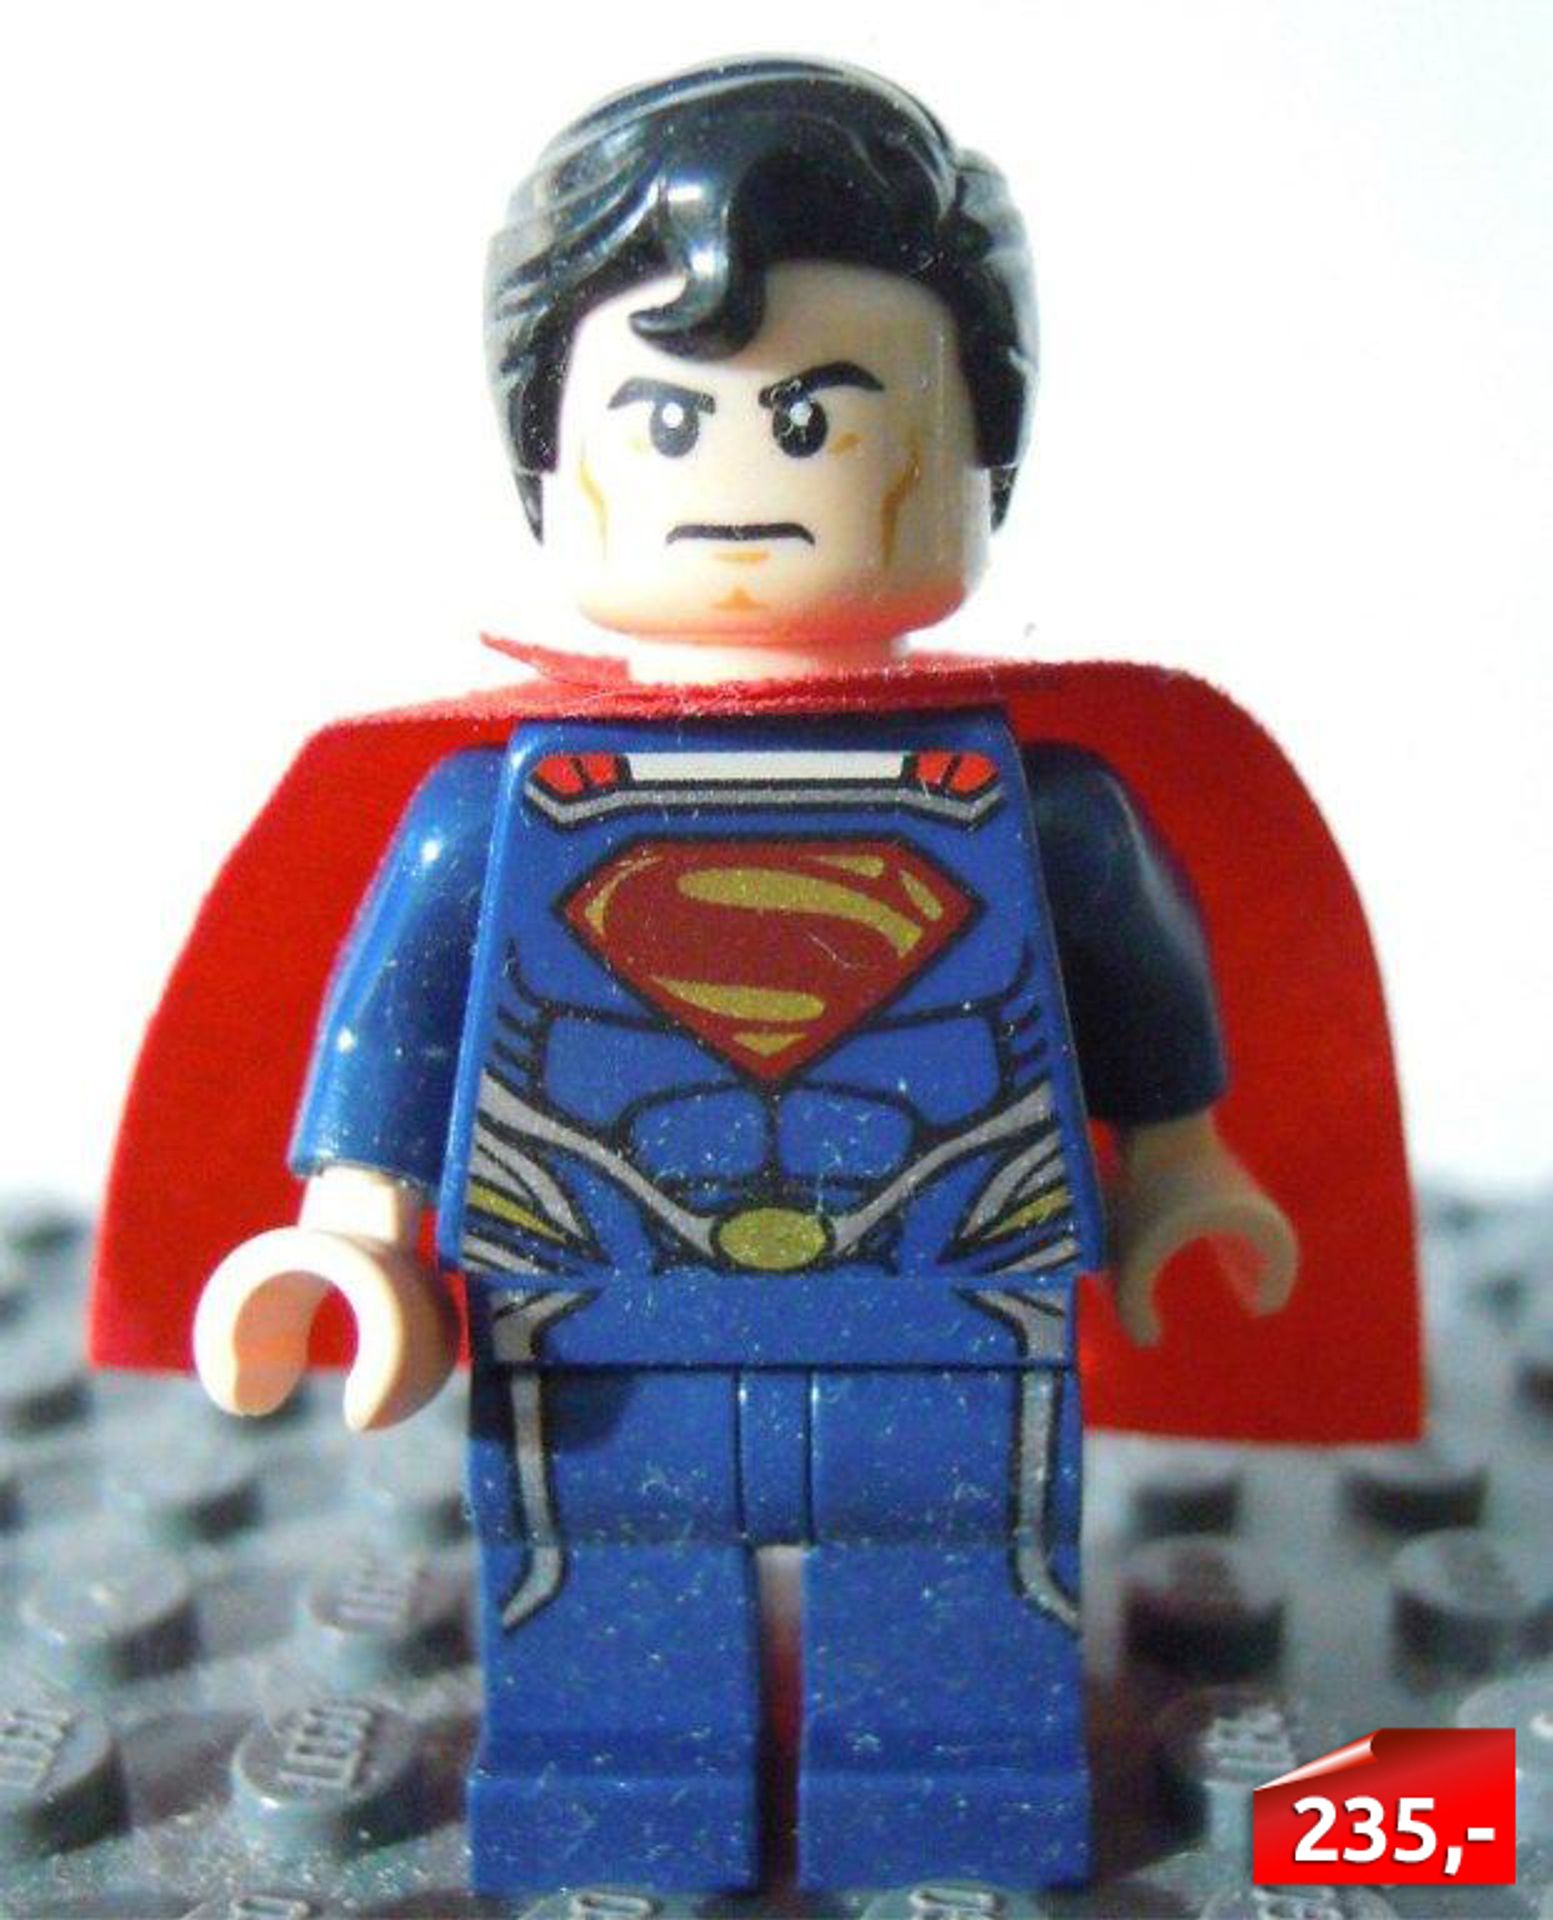 Lego figurka Superman - SuperHeroes - 235 Kč - GALERIE: Cenné LEGO figurky (10/12)